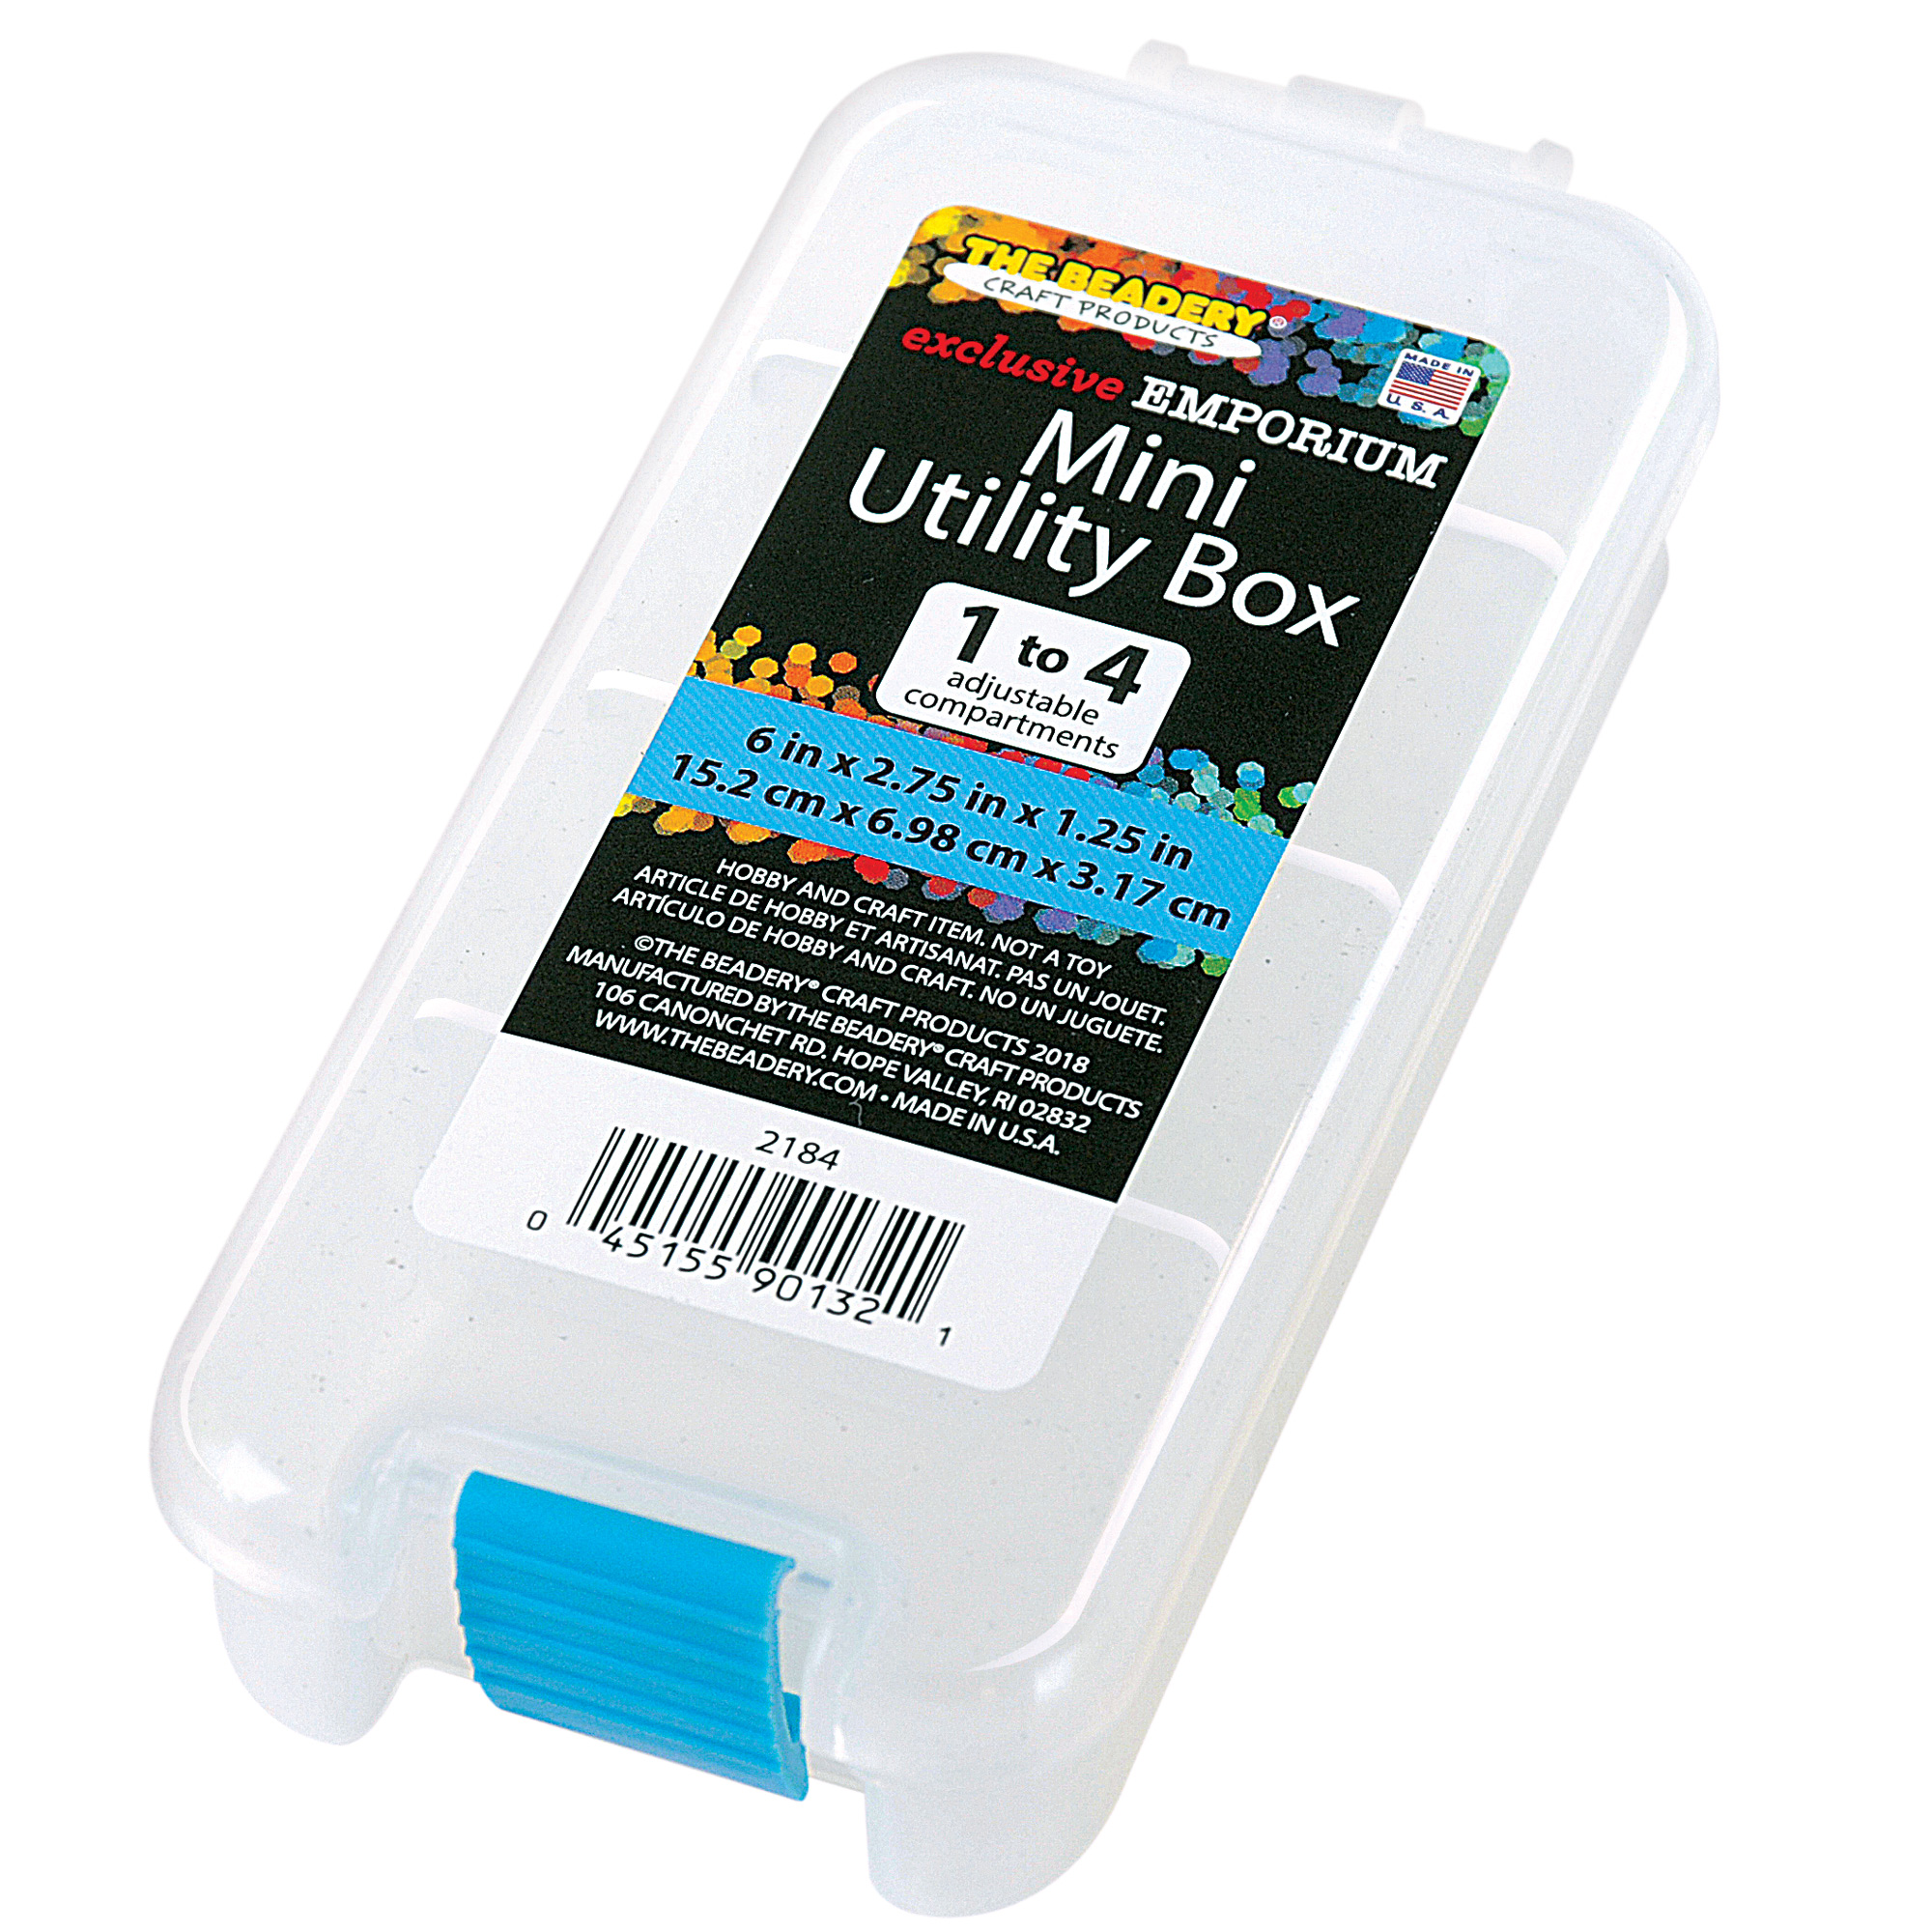 2184 - Mini Utility Box